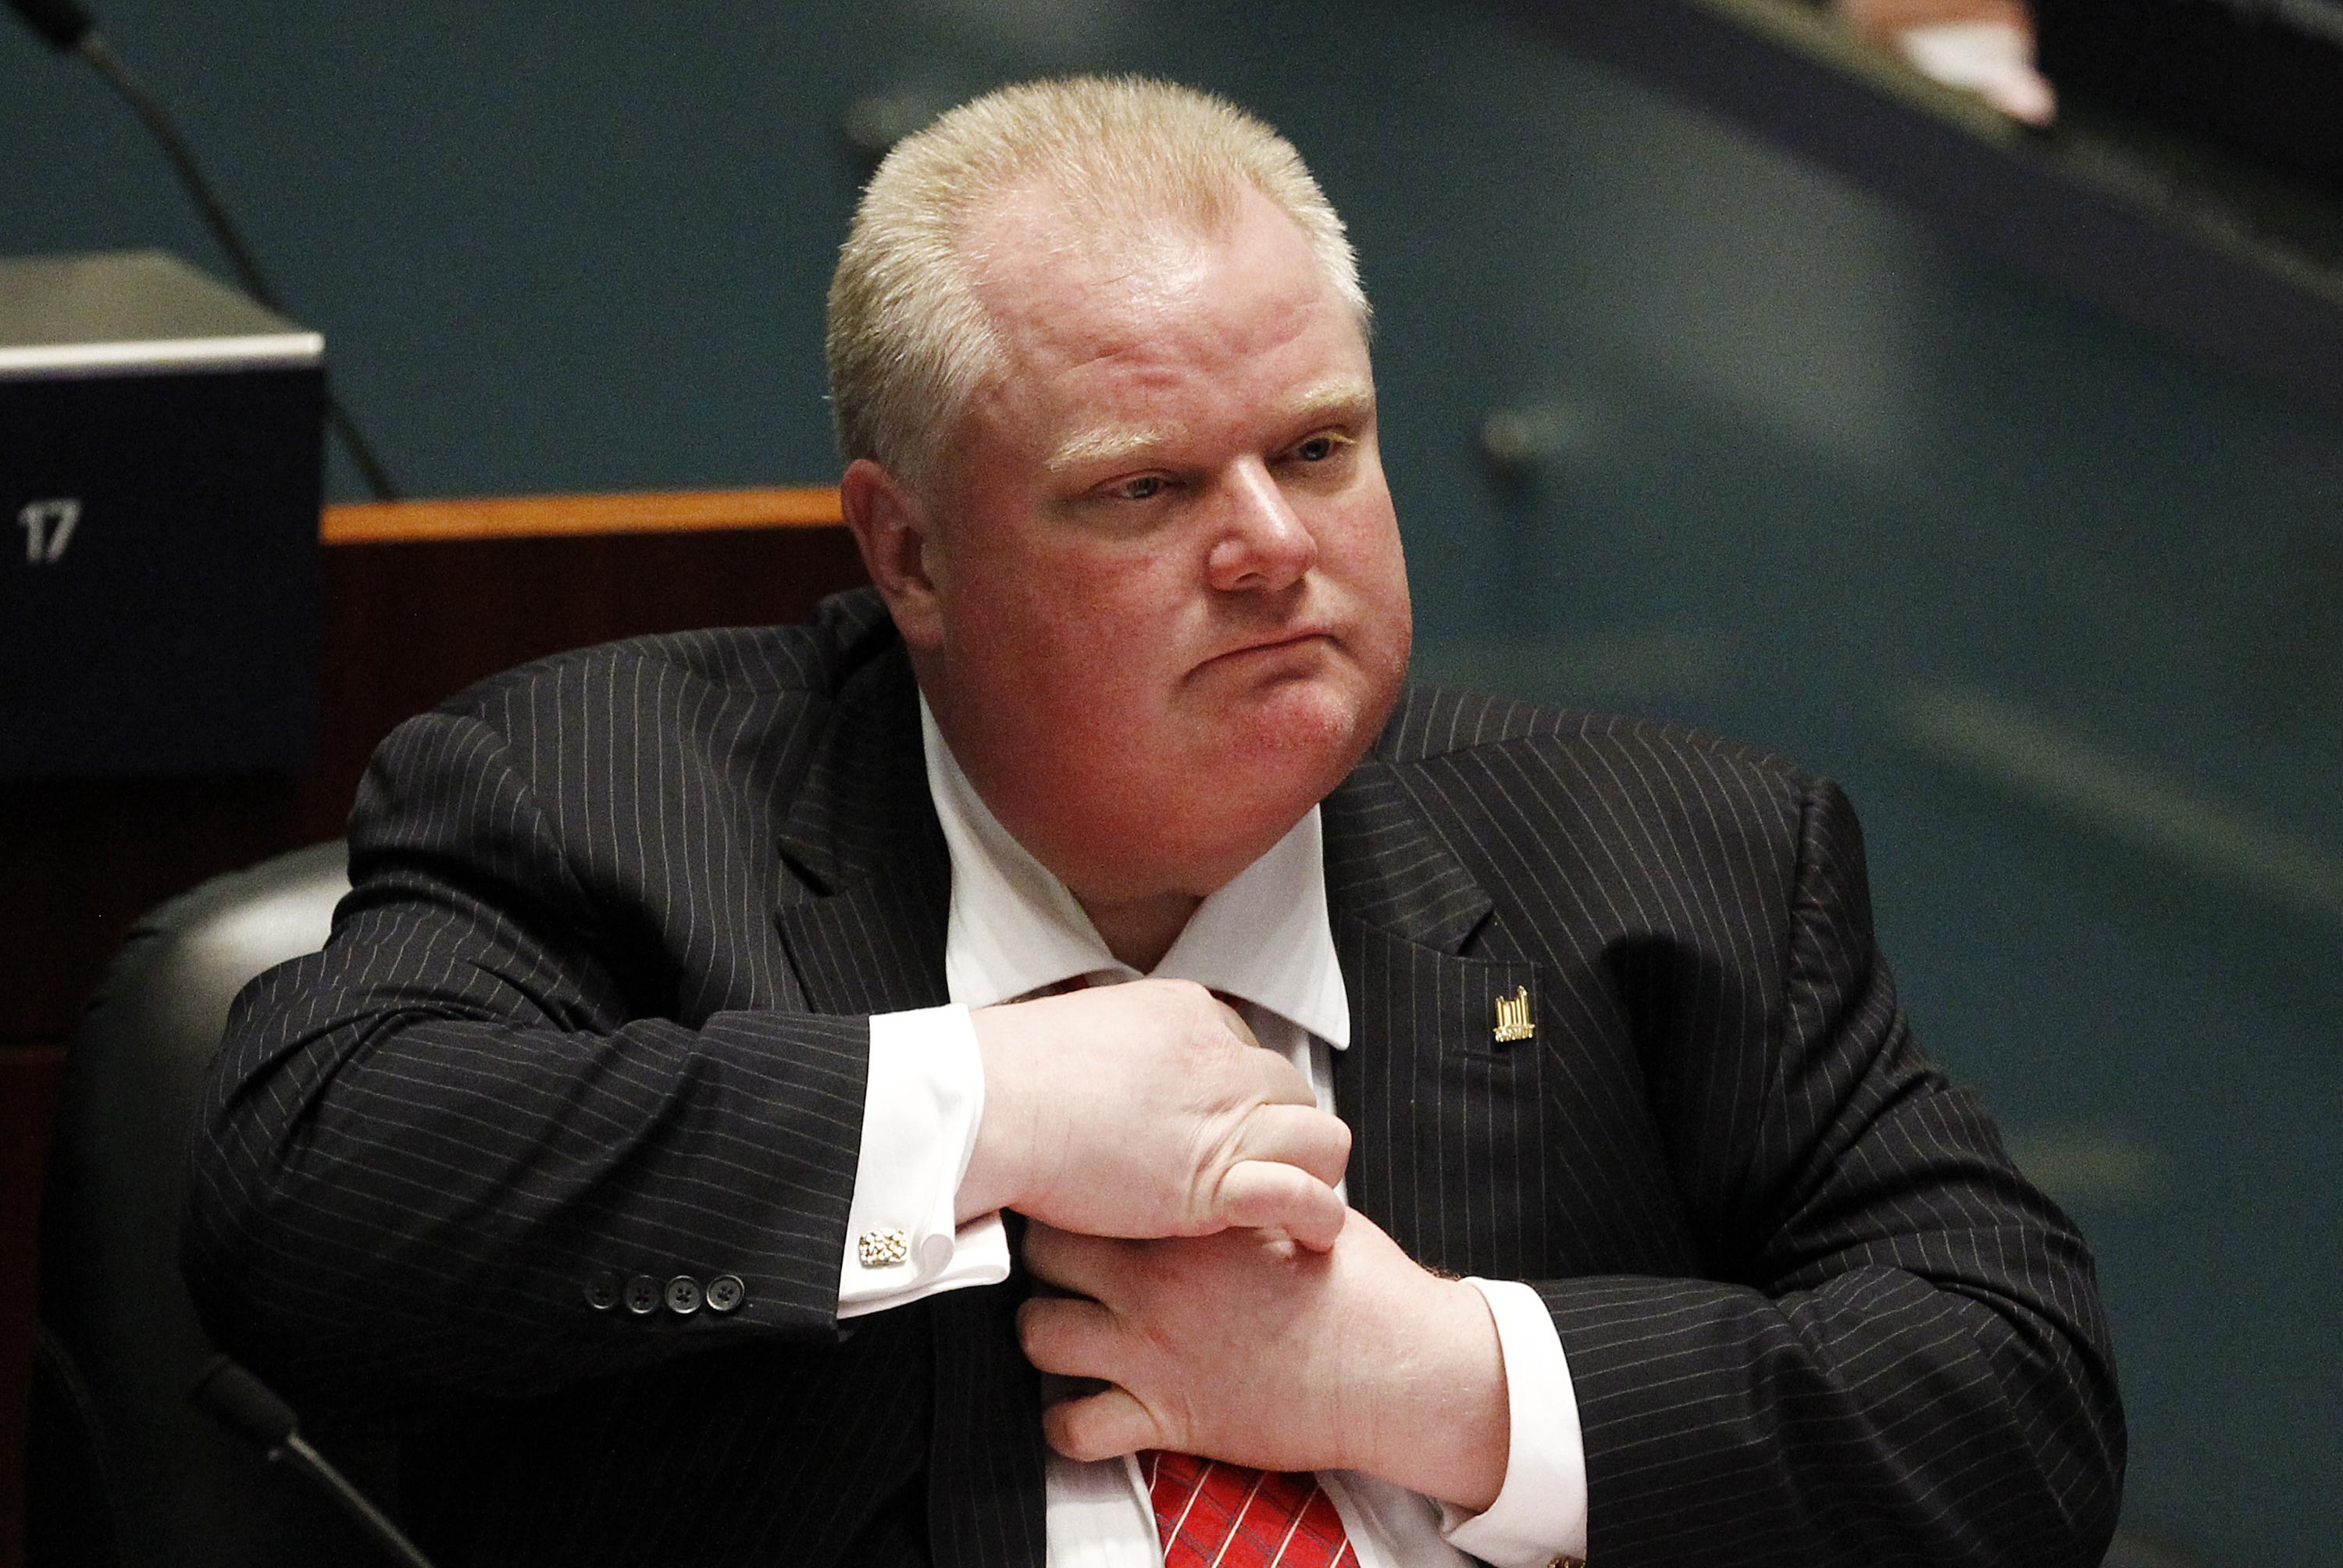 Toronto Mayor Rob Ford. Photo: Reuters